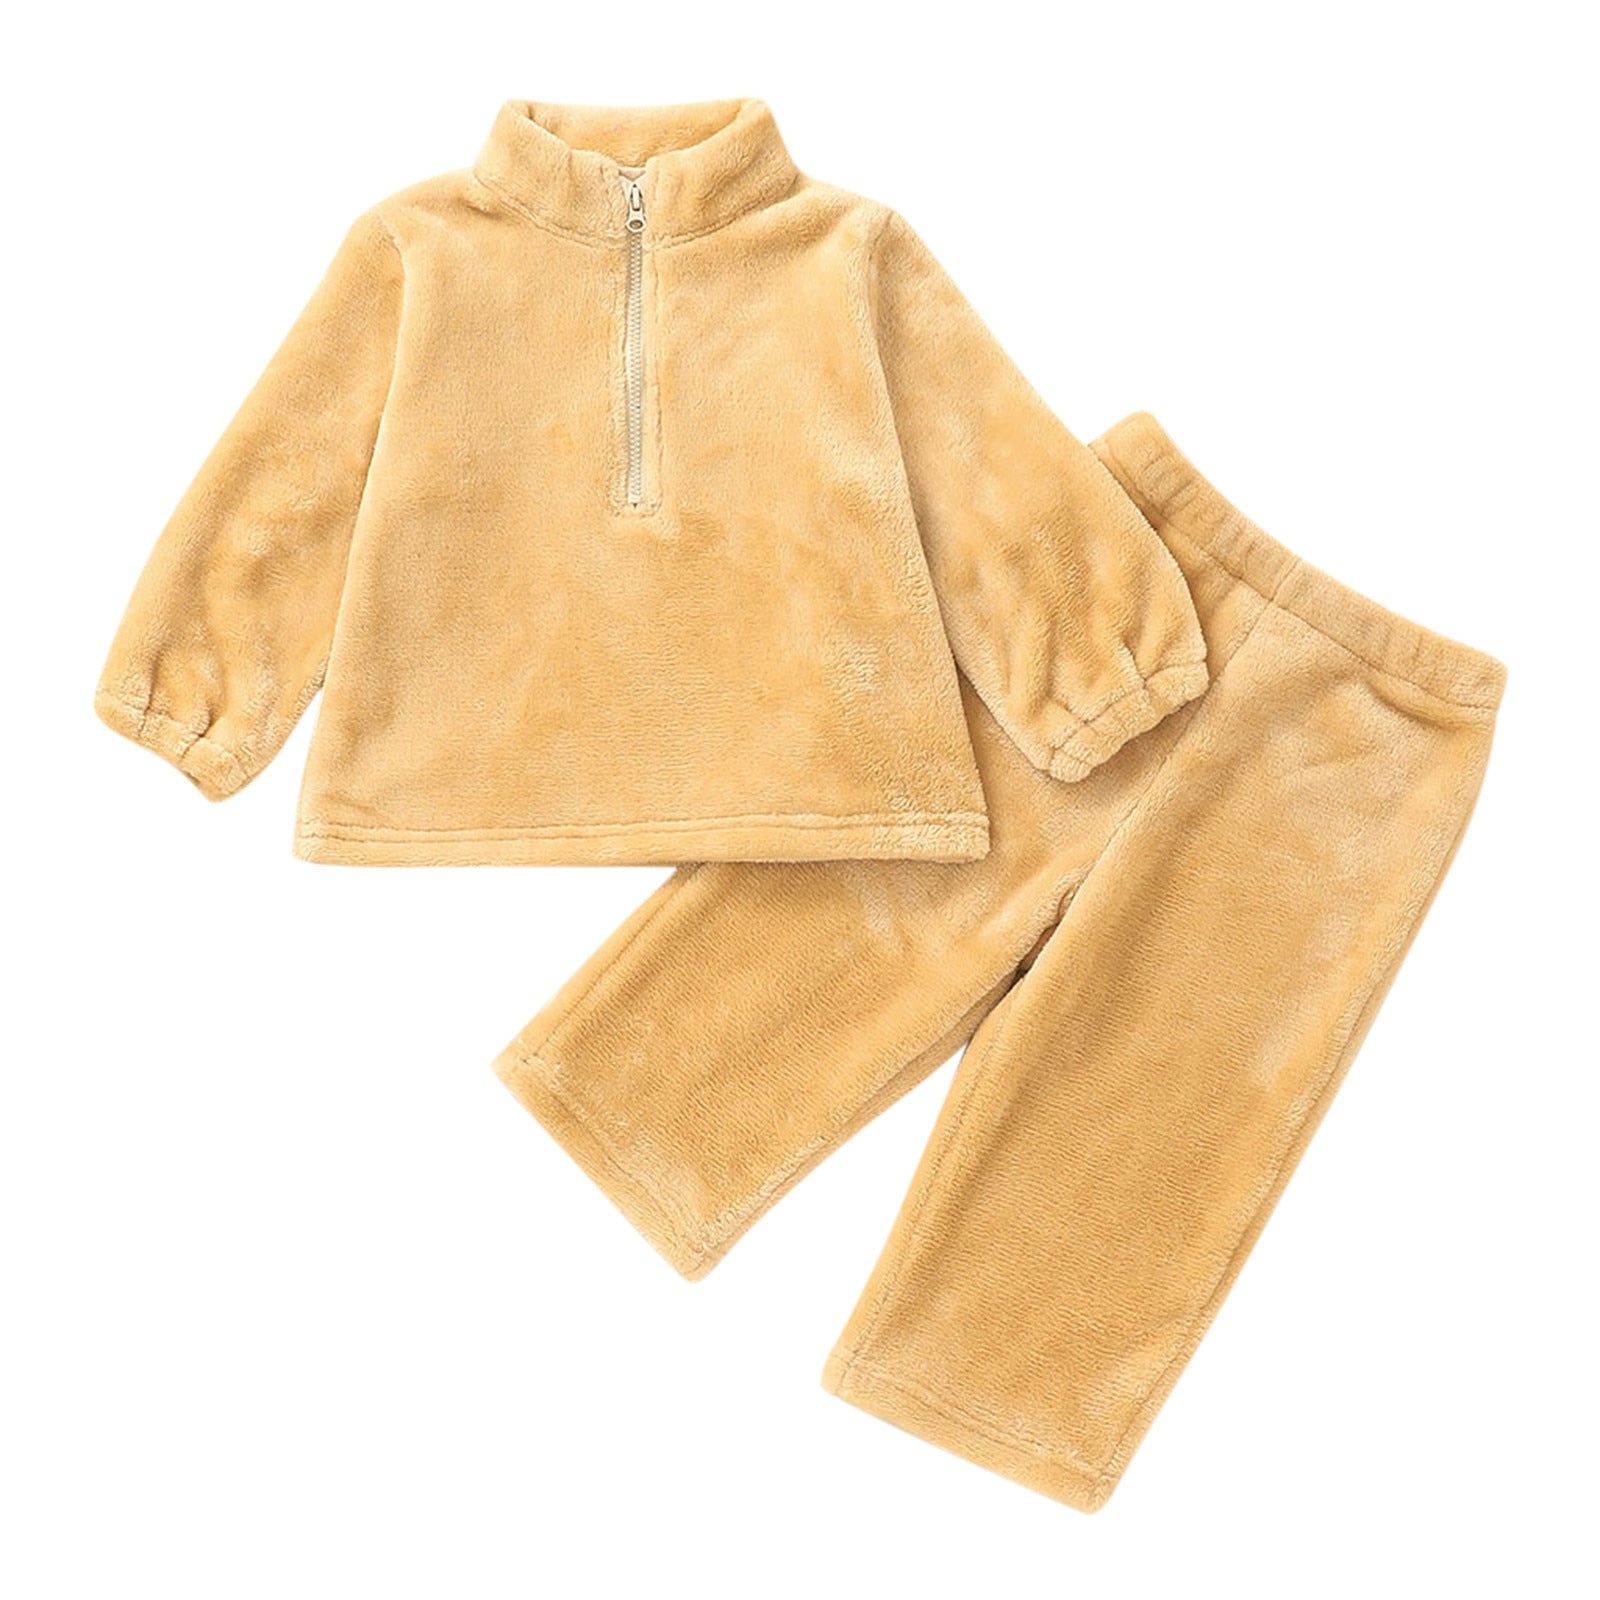 Baby Girls/Boys Solid Long Sleeve Sweatshirt Fleece Top Pants Winter 2 Pcs outfit